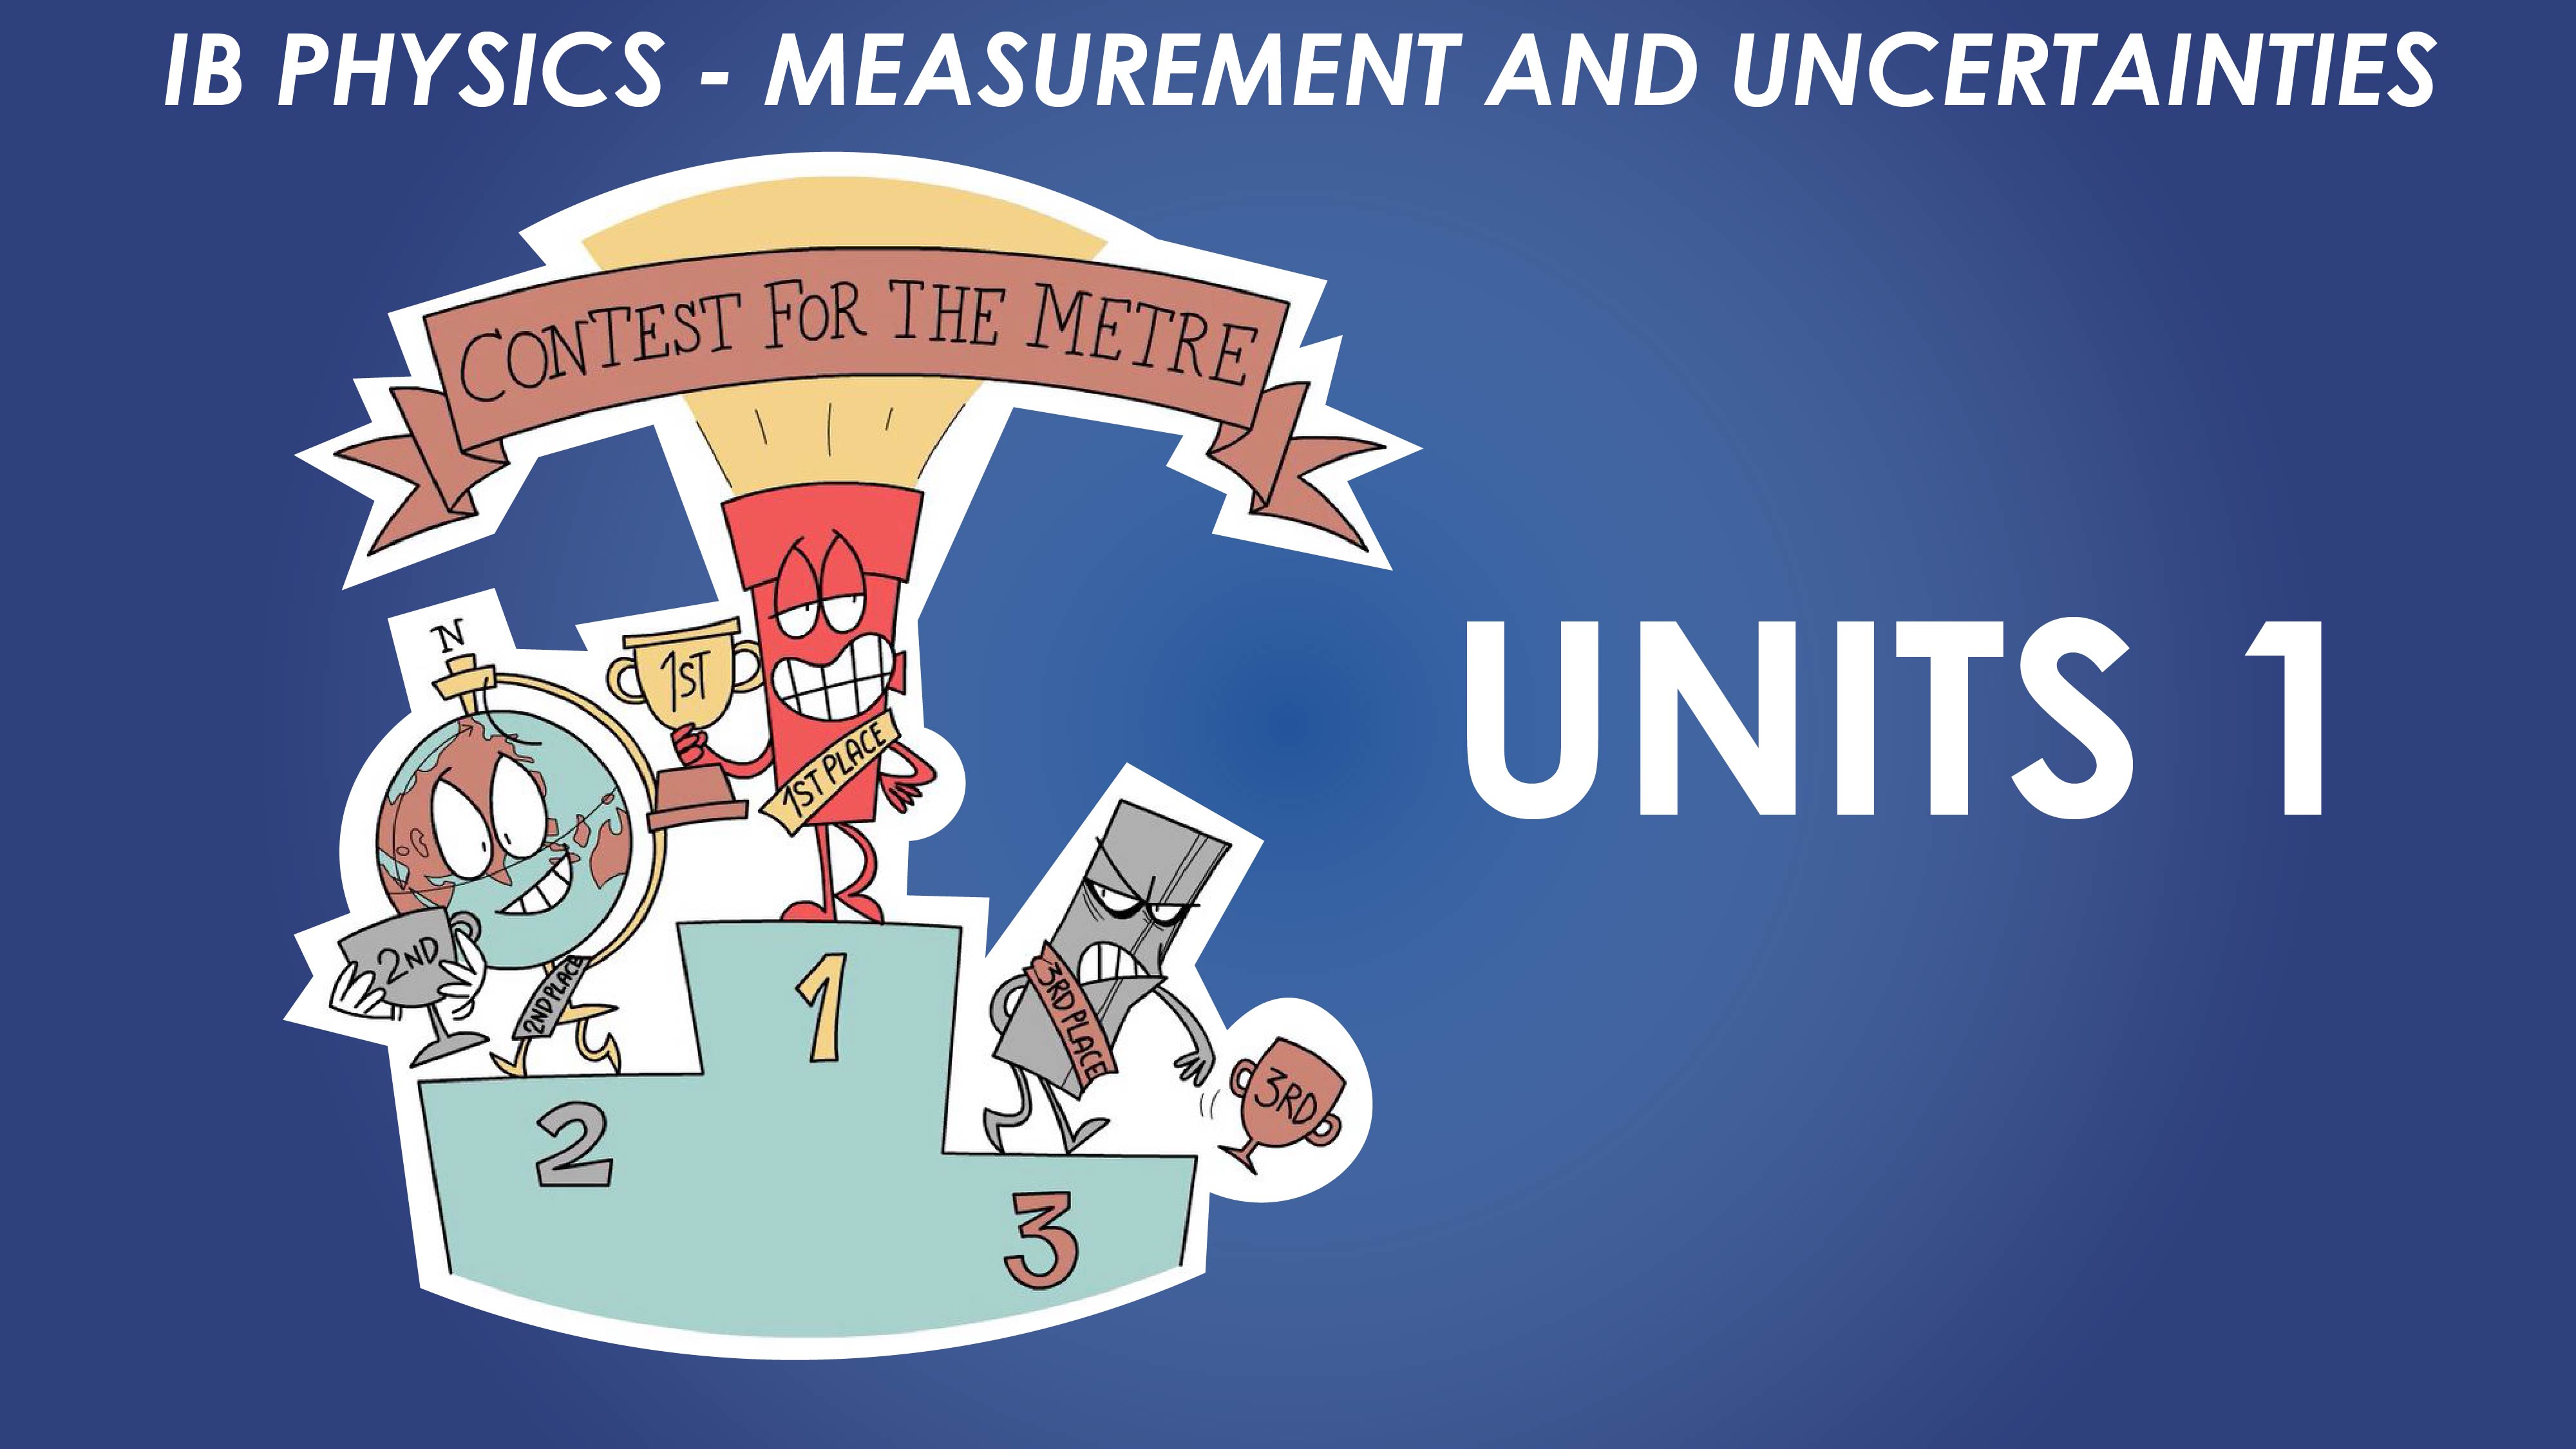 IB Measurement and Uncertainties - Units 1 